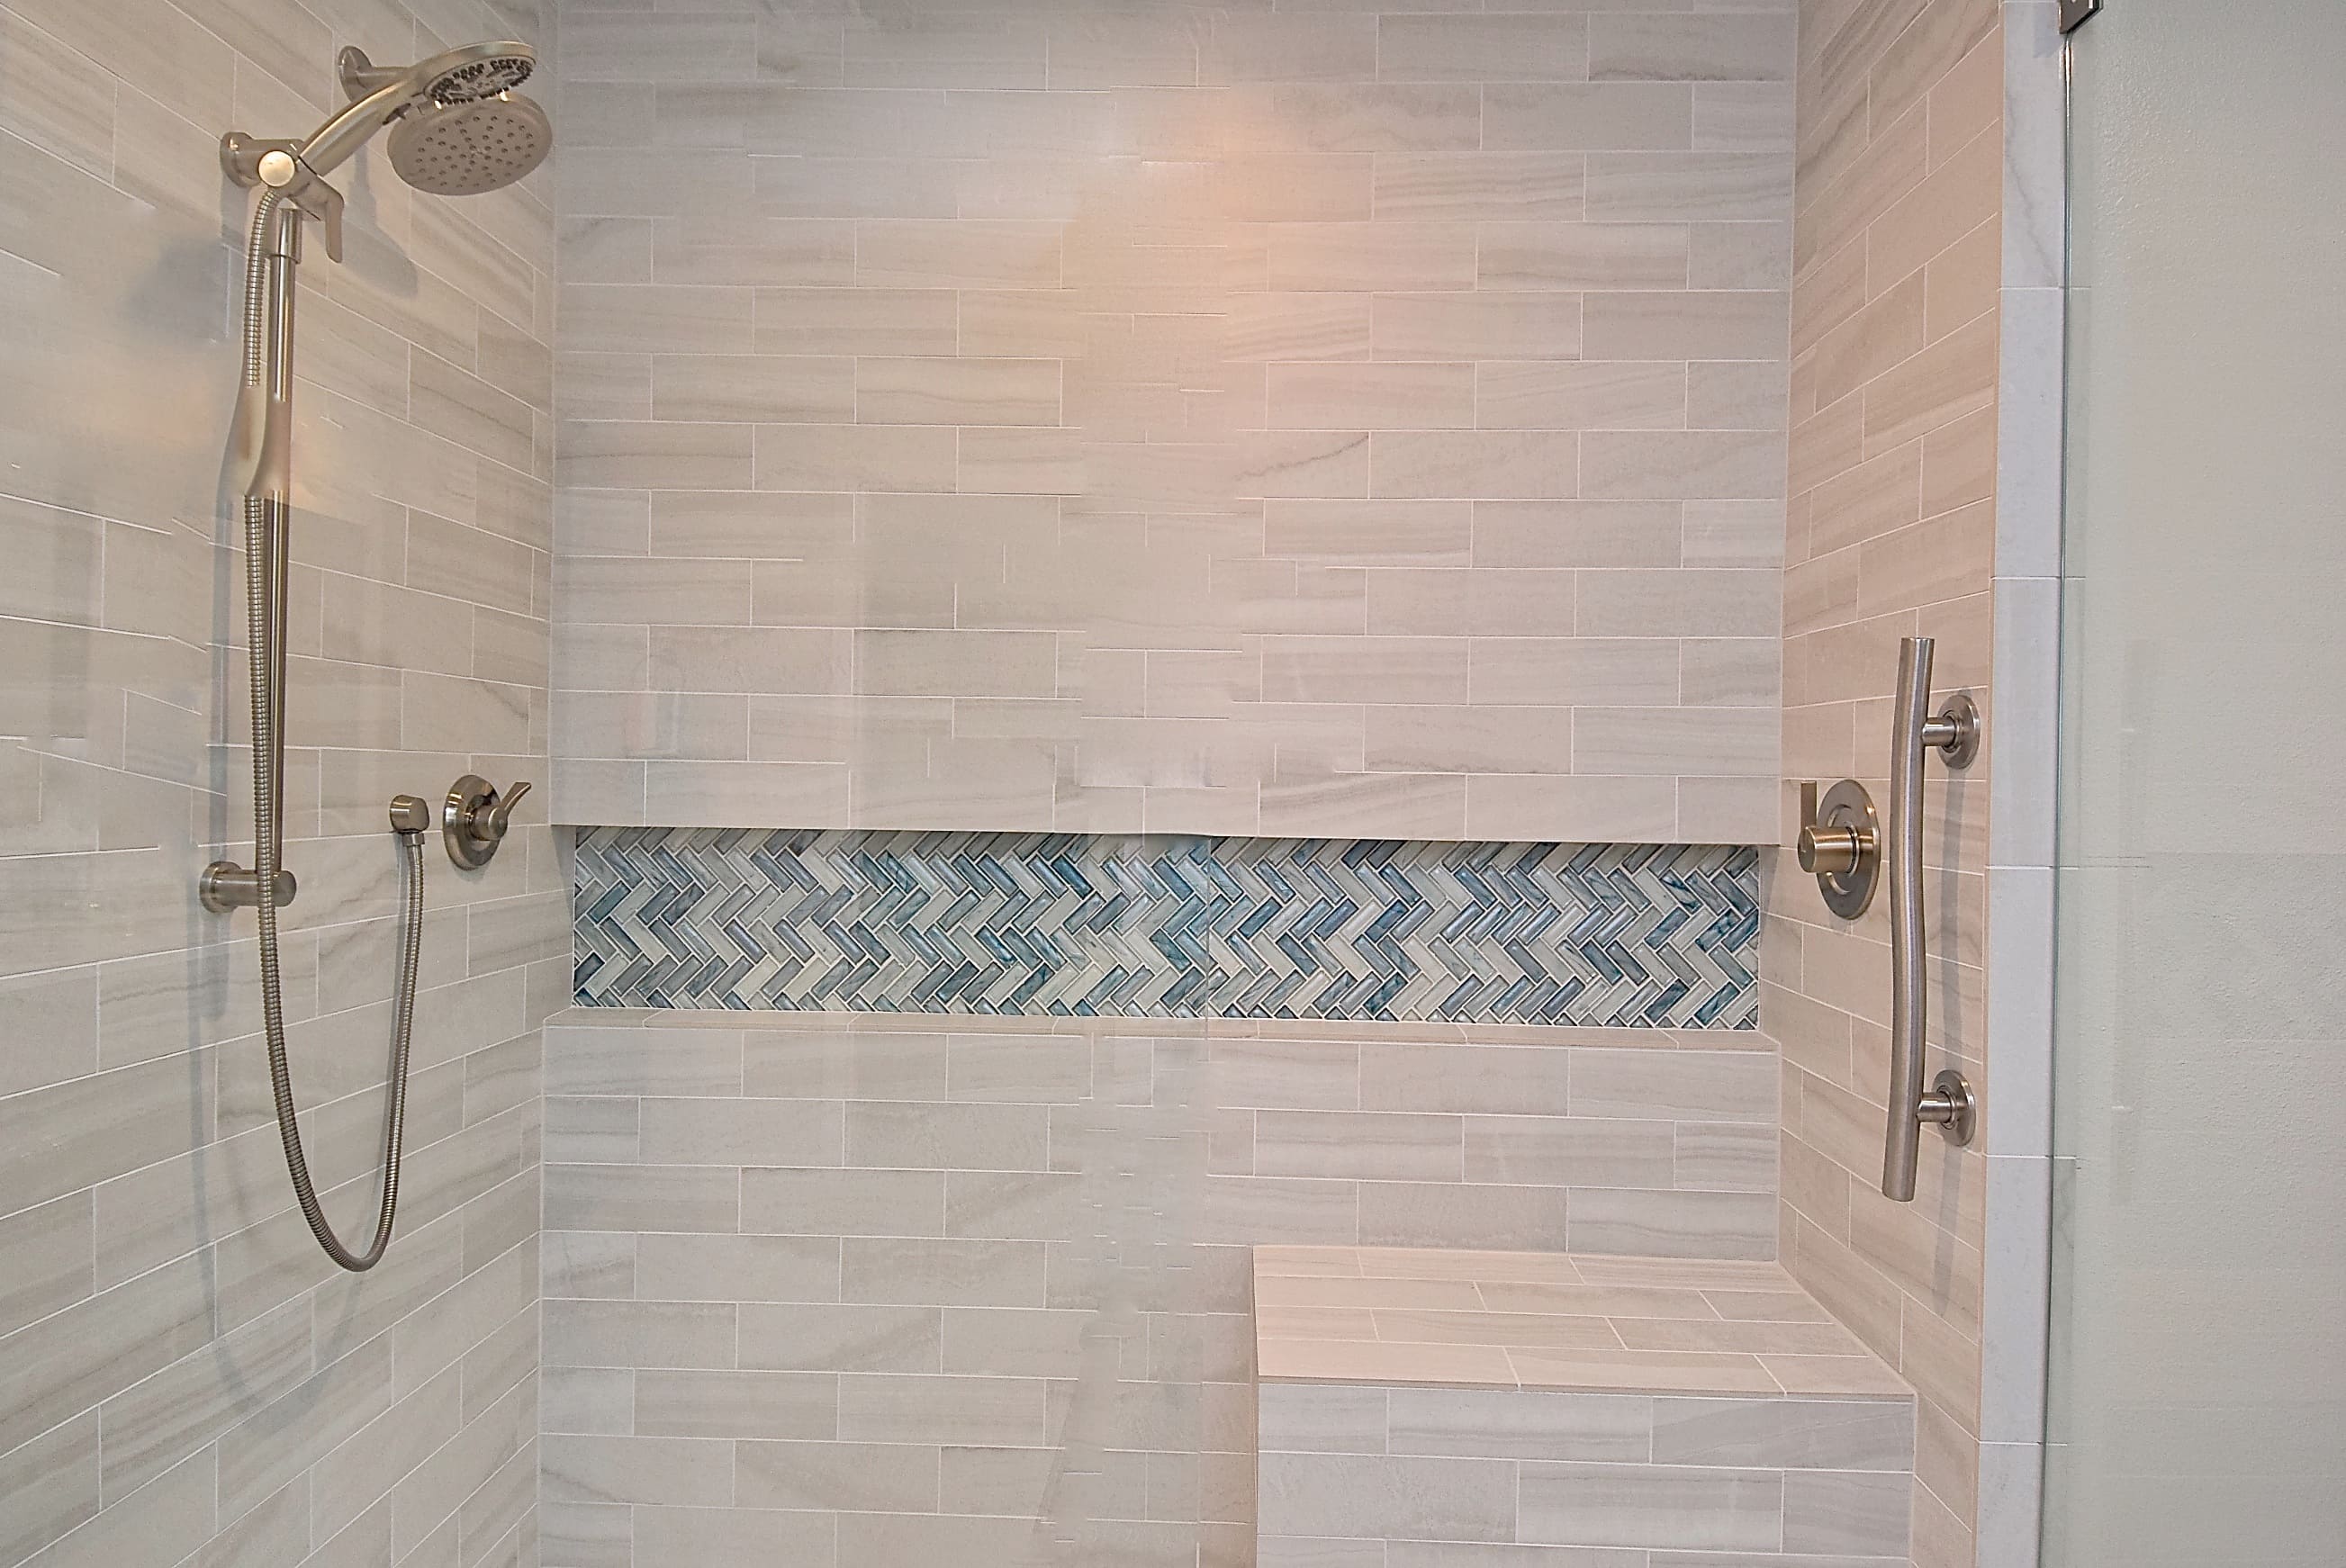 Custom Niche in ADA Bathroom Renovation in Bradenton with Grab Bars in Tiled Level Entry Shower